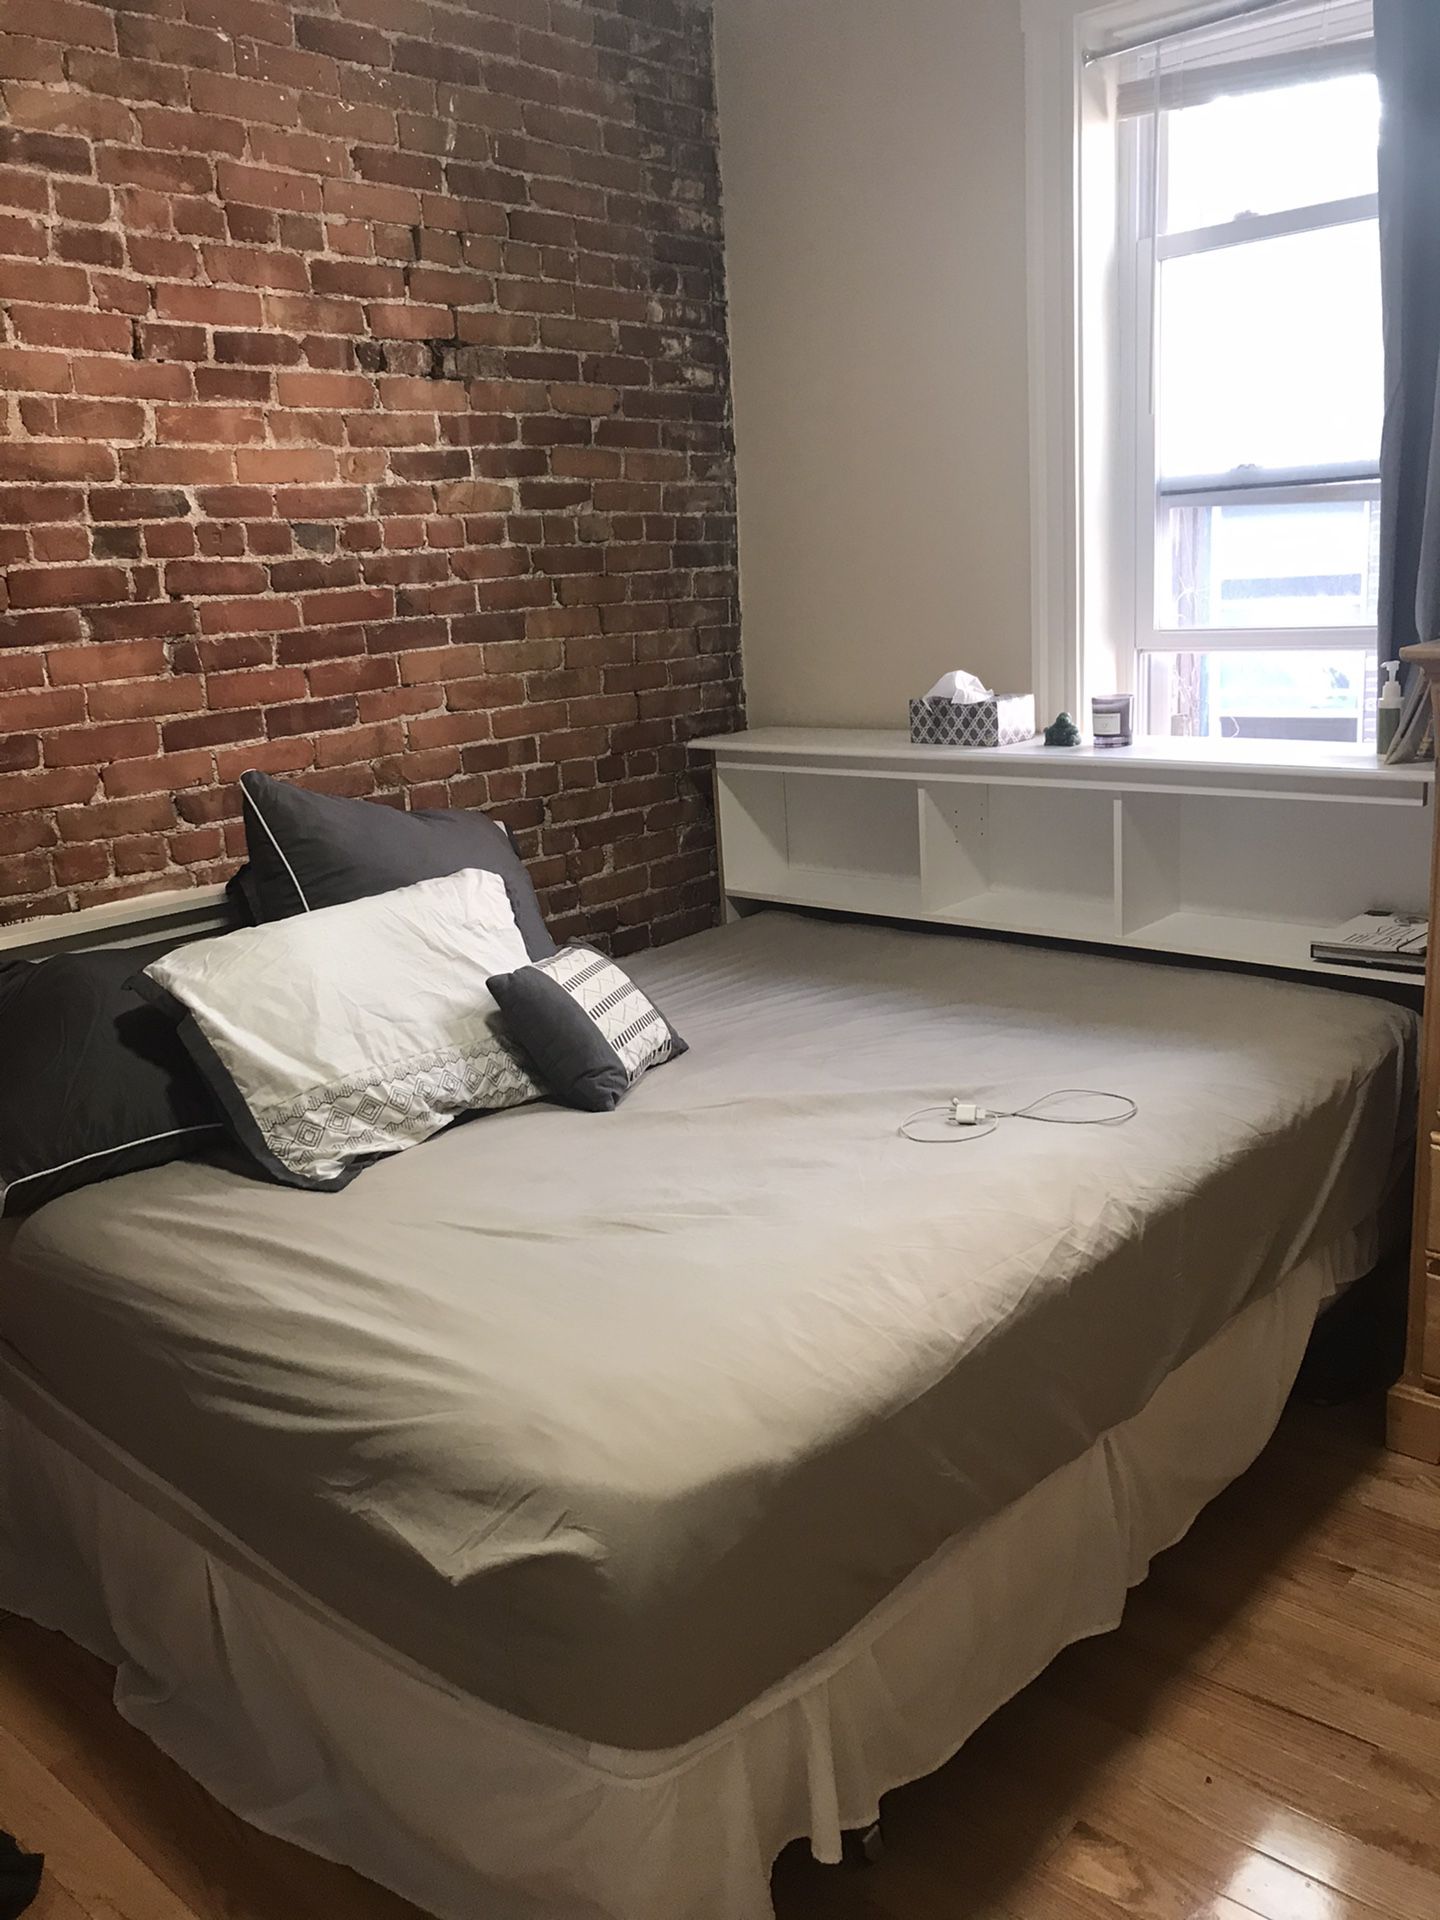 Bed Set - mattress, frame, box spring